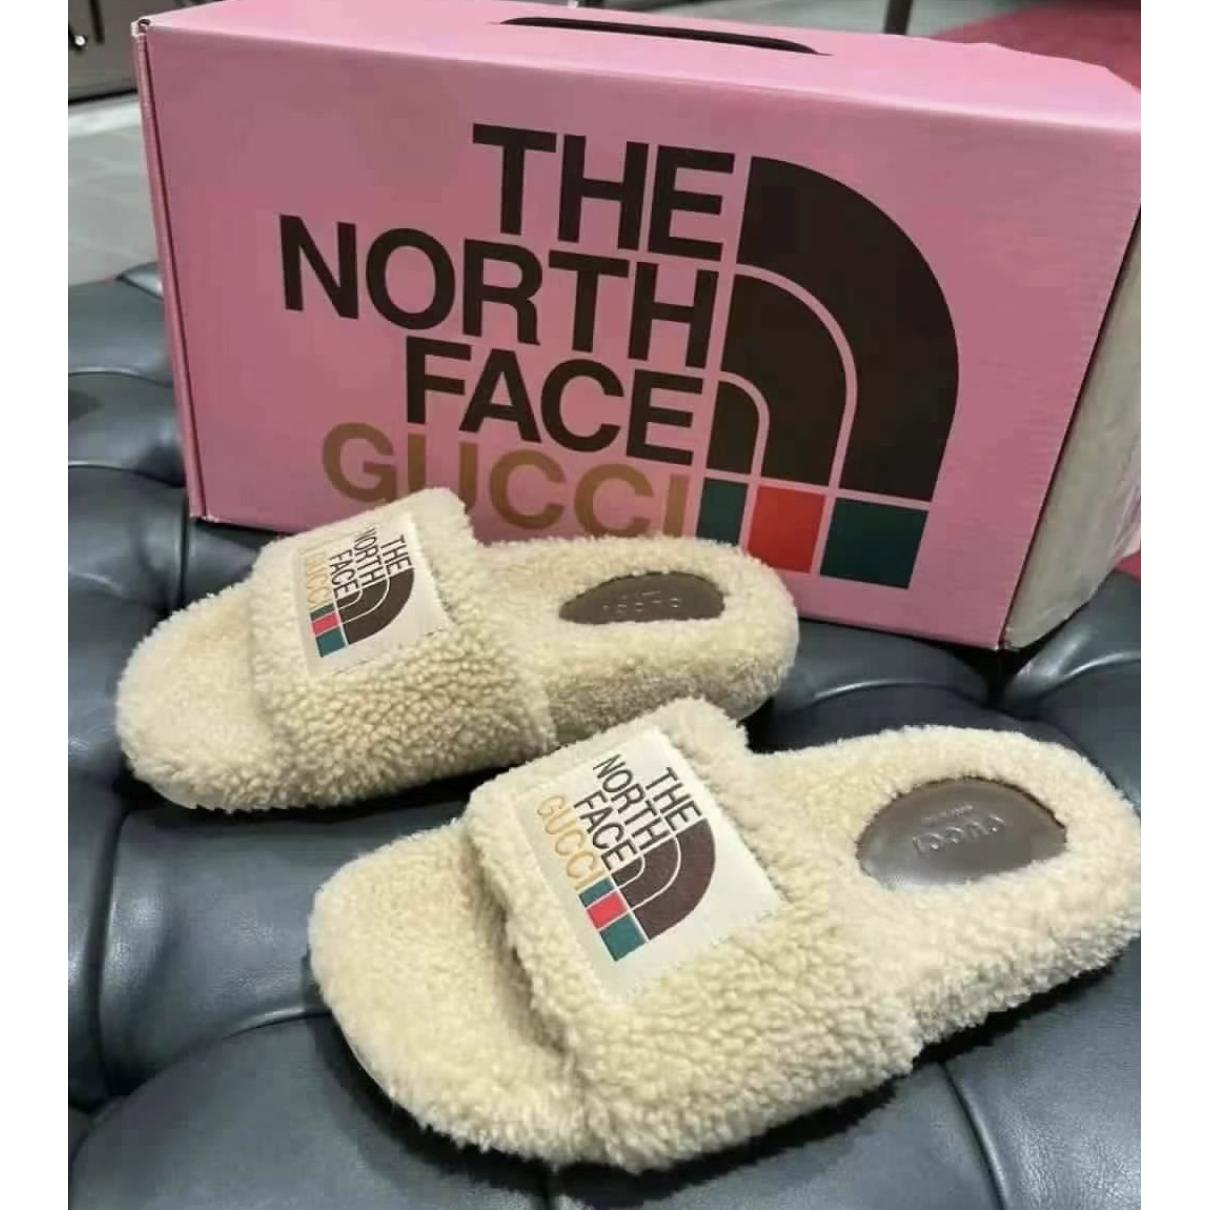 The North Face x Gucci - Shearling flats - 9